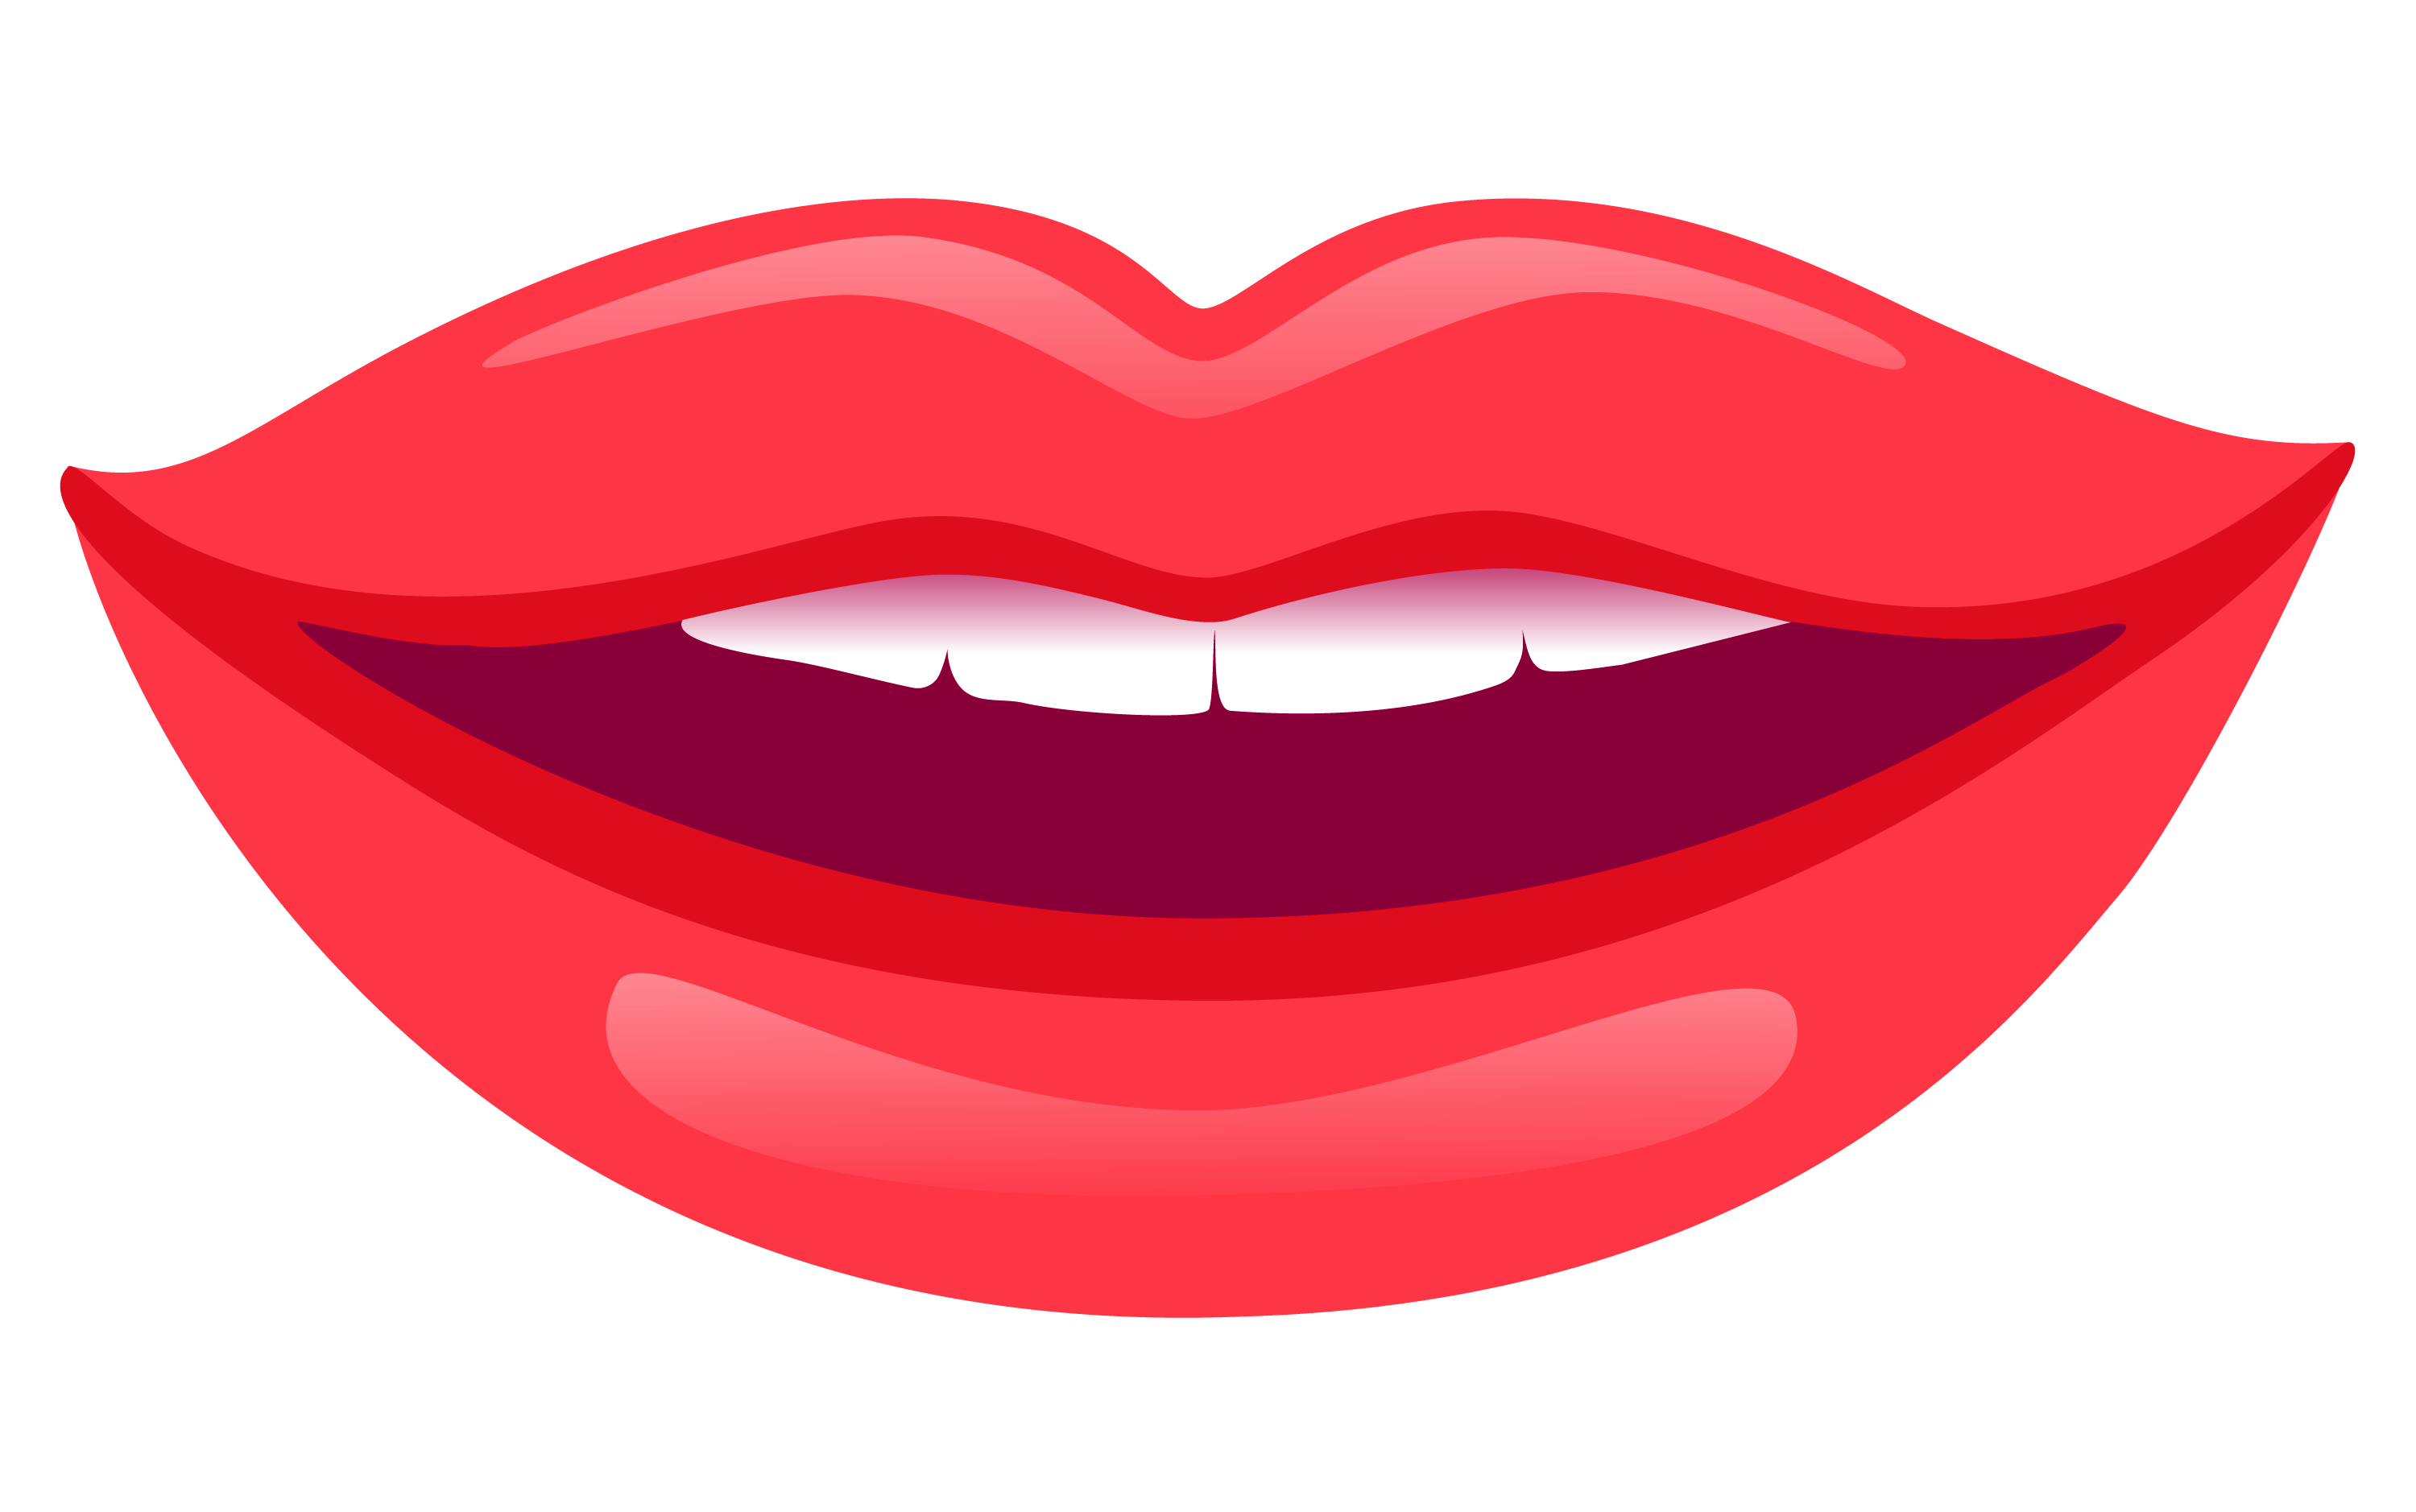 Lips PNG Transparent Image - PngPix